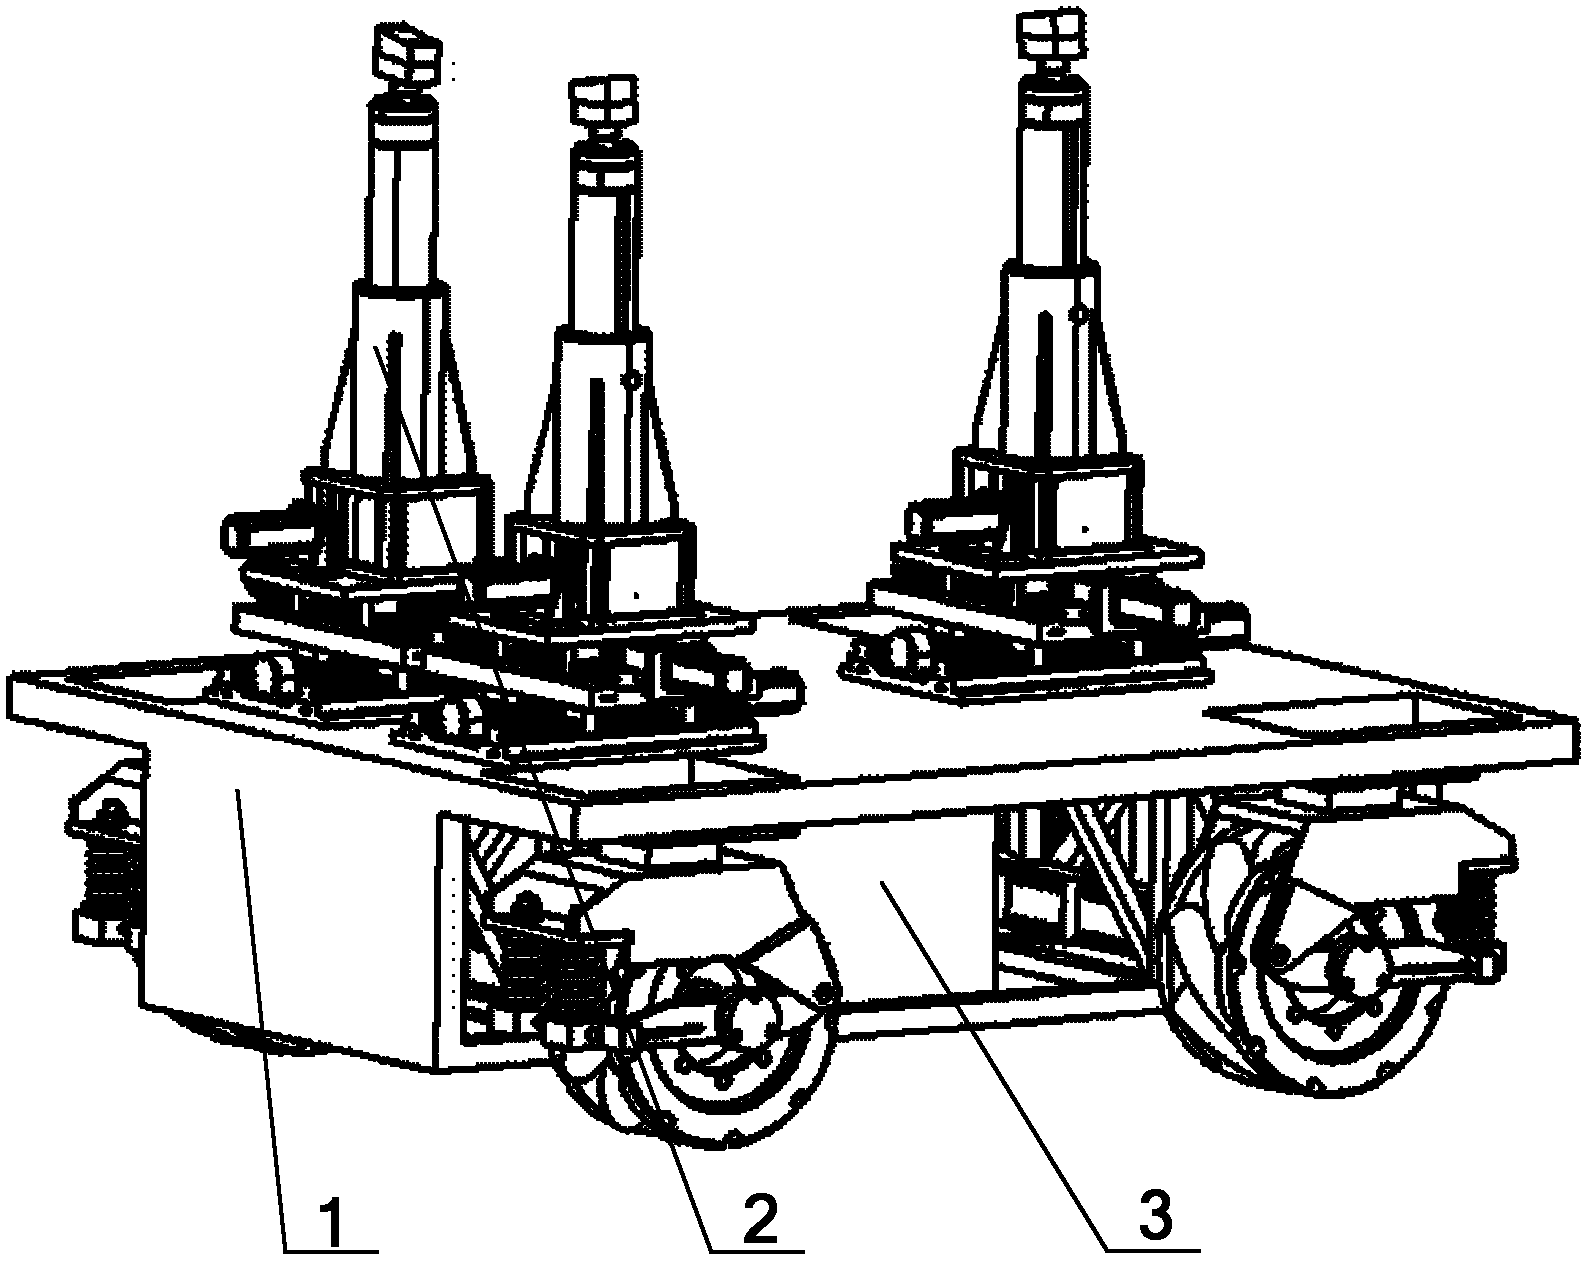 Multi-model parts universal transporter